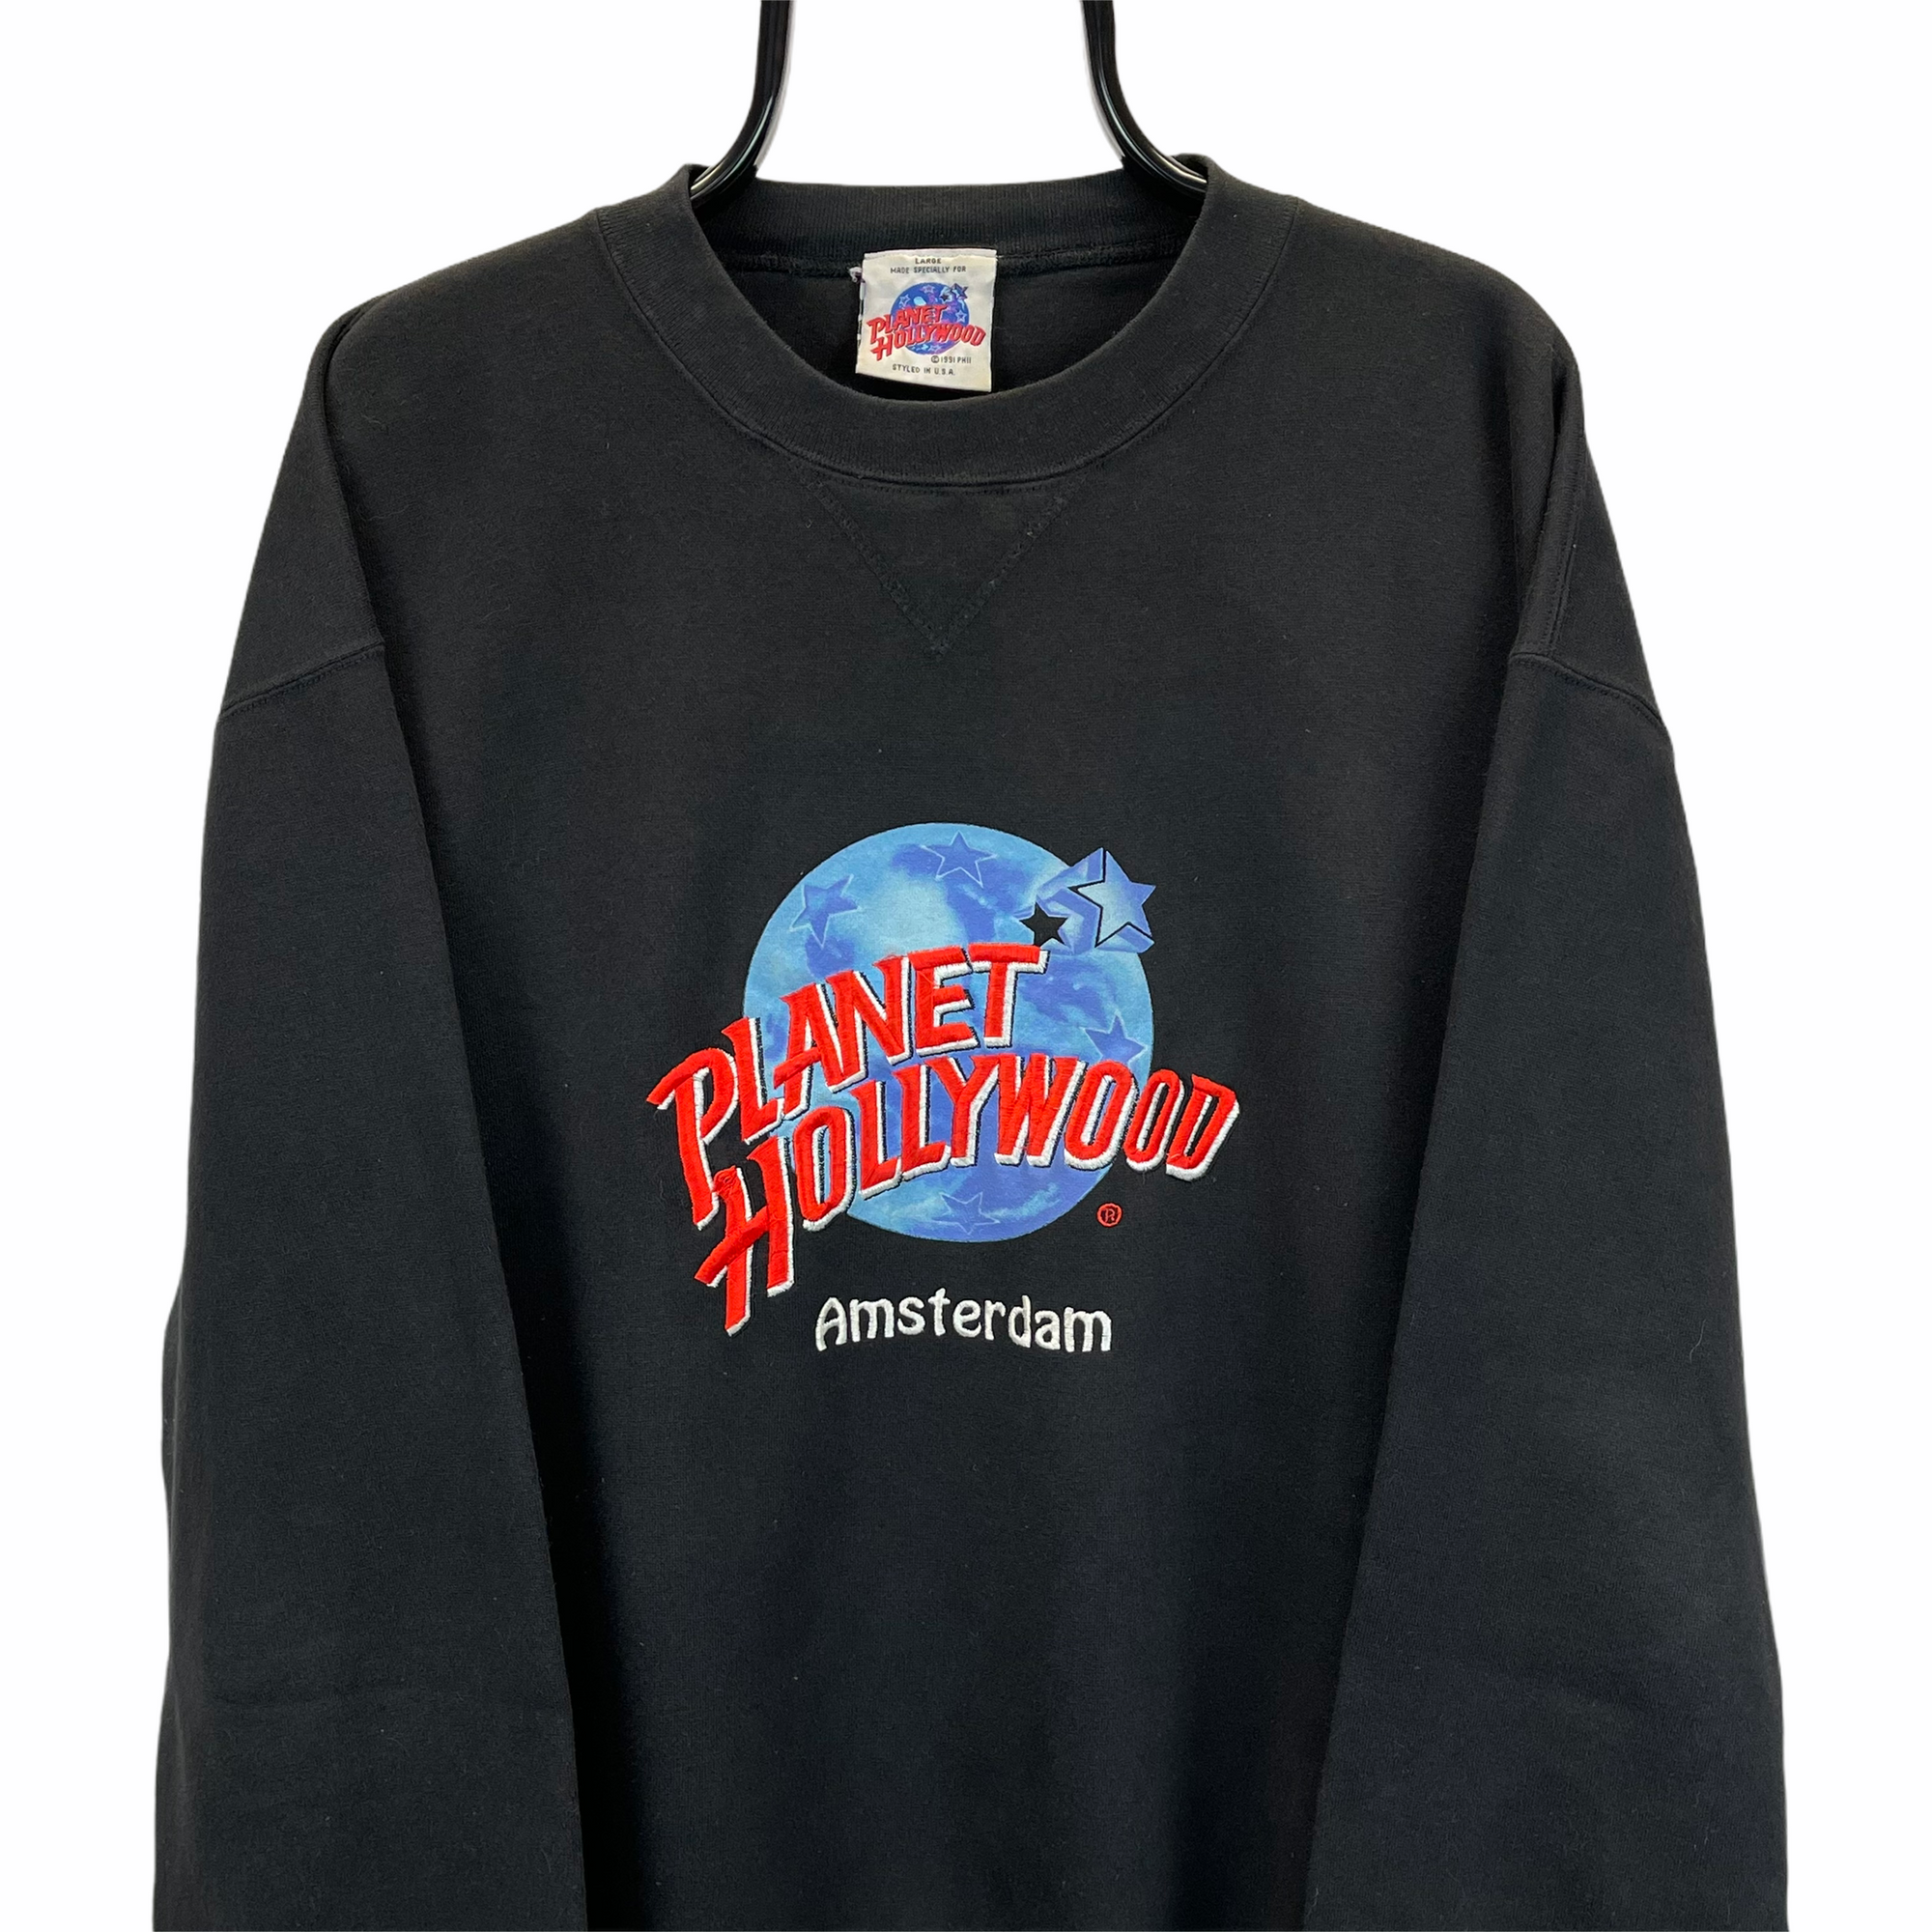 Vintage 90s Planet Hollywood Amsterdam Sweatshirt - Men's XL/Women's XXL